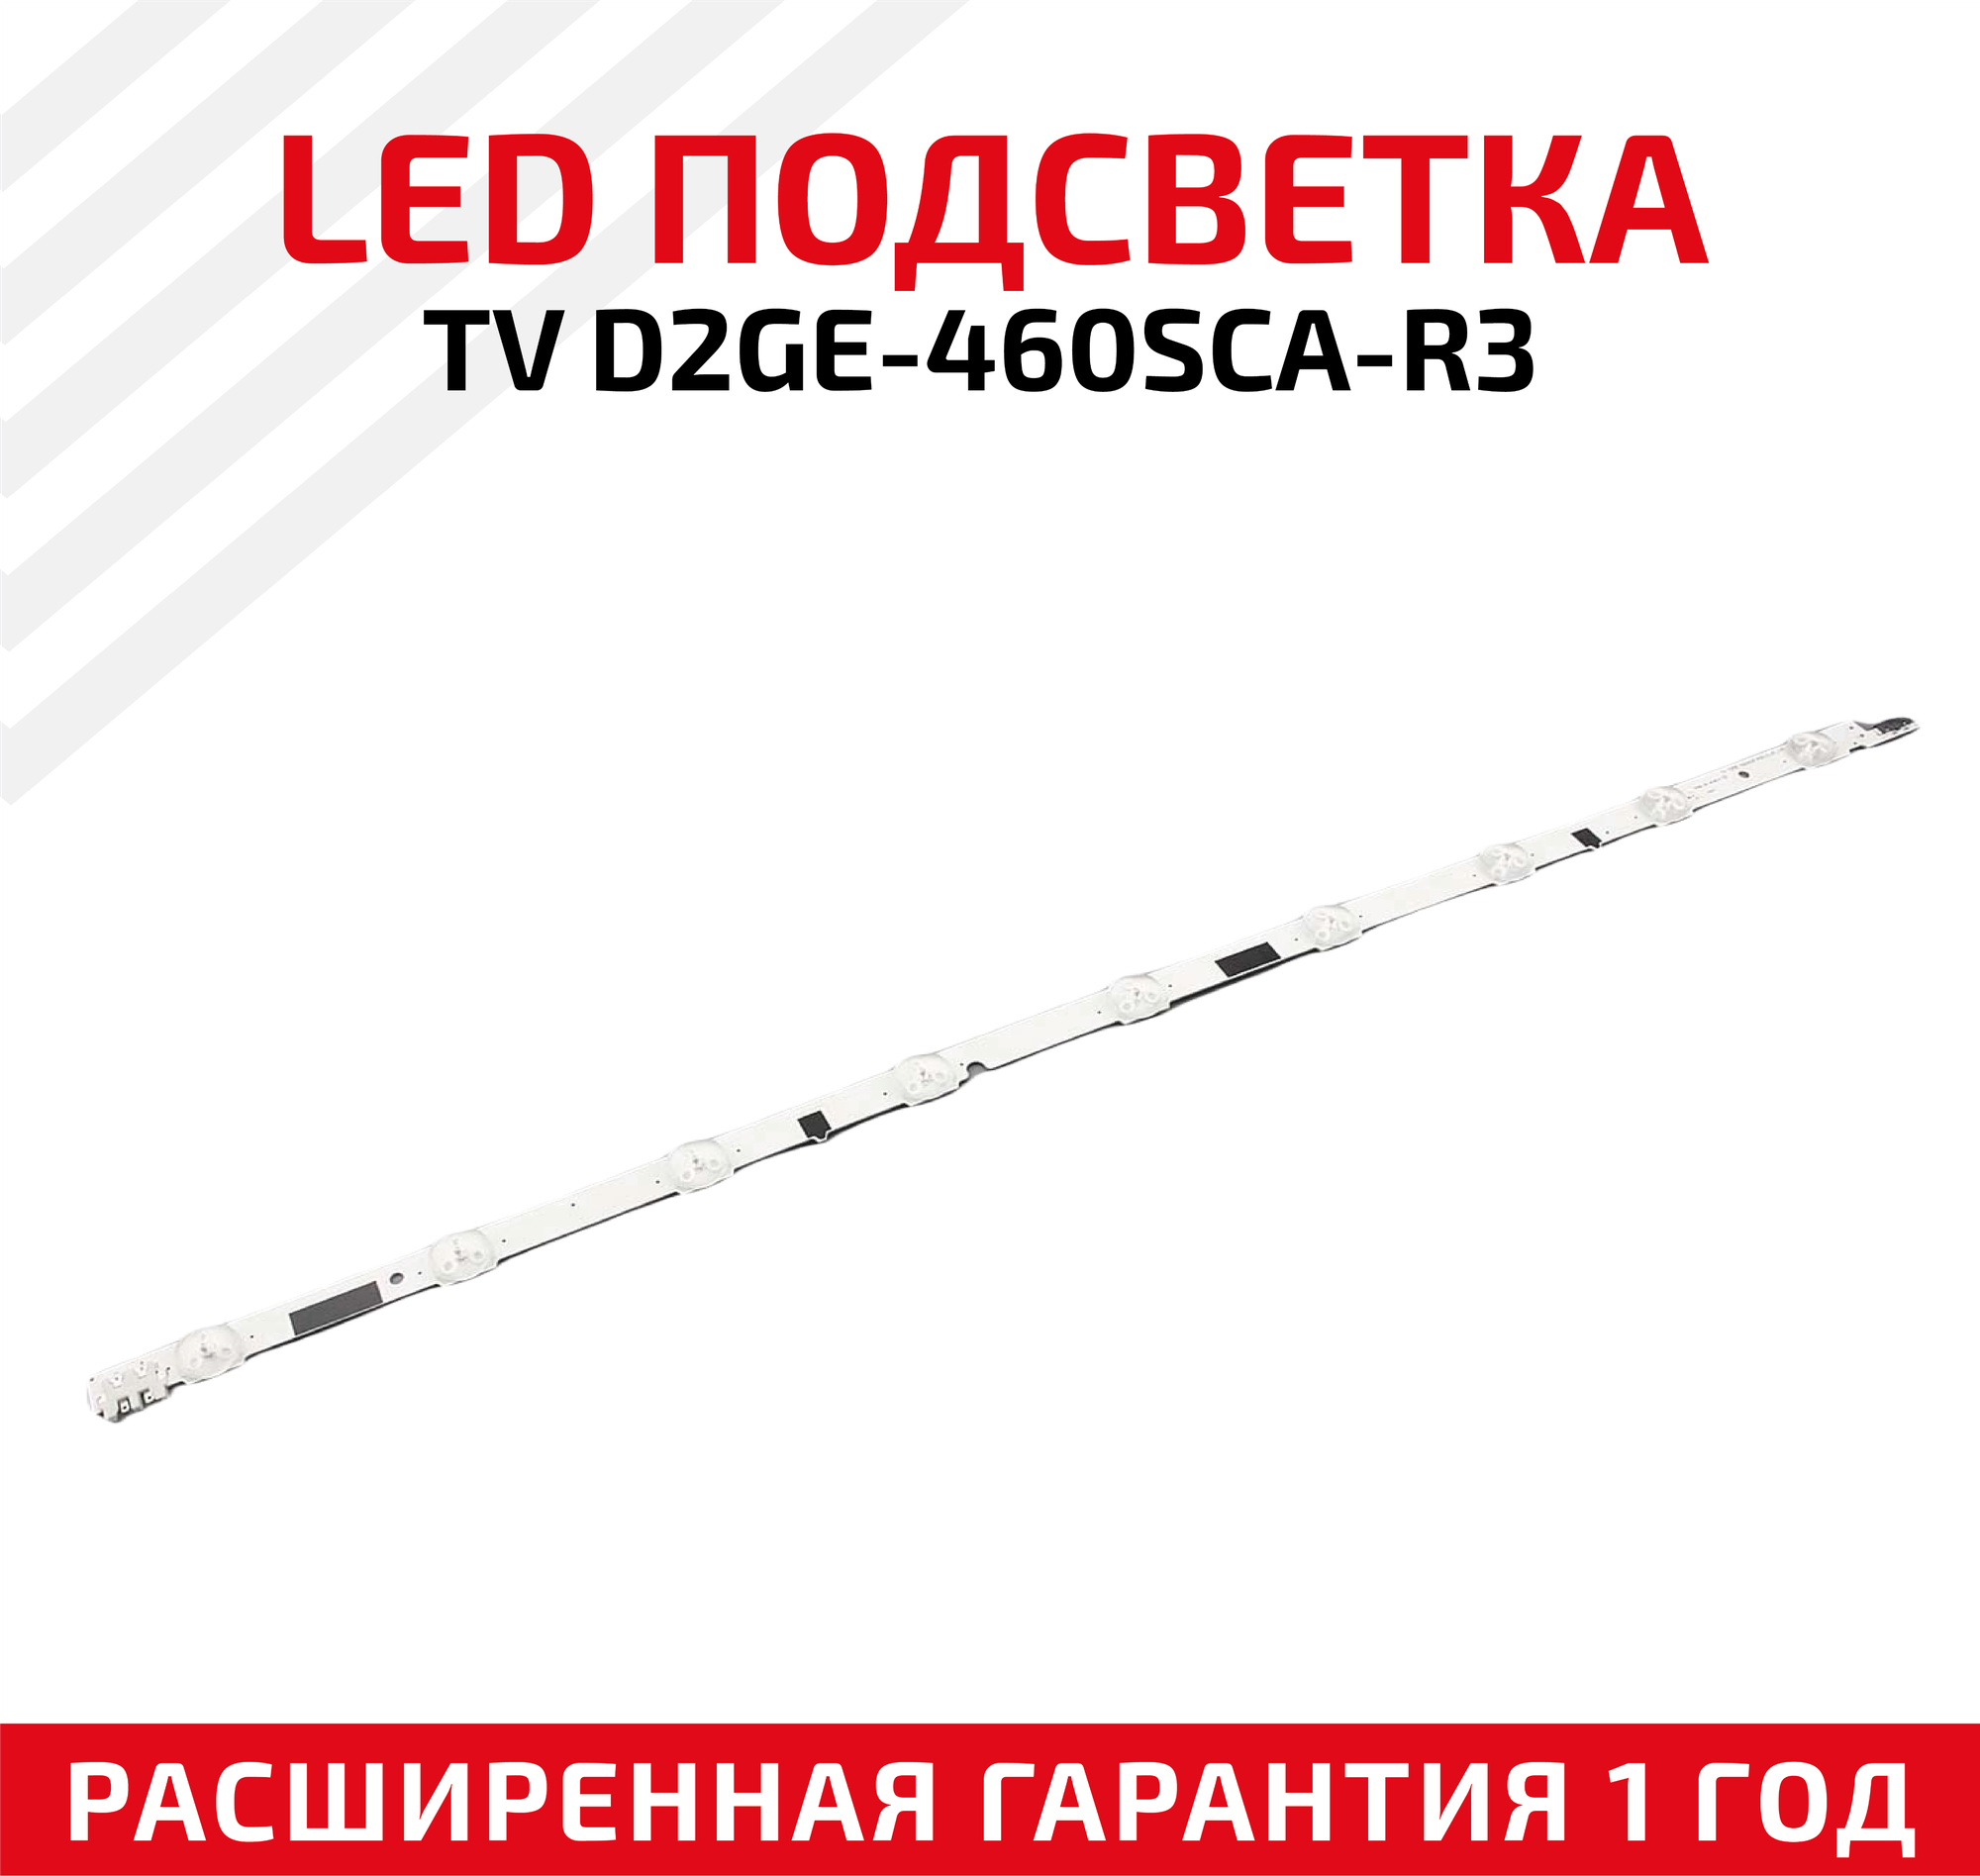 LED подсветка (светодиодная планка) для телевизора TV D2GE-460SCA-R3 (13,01,14)